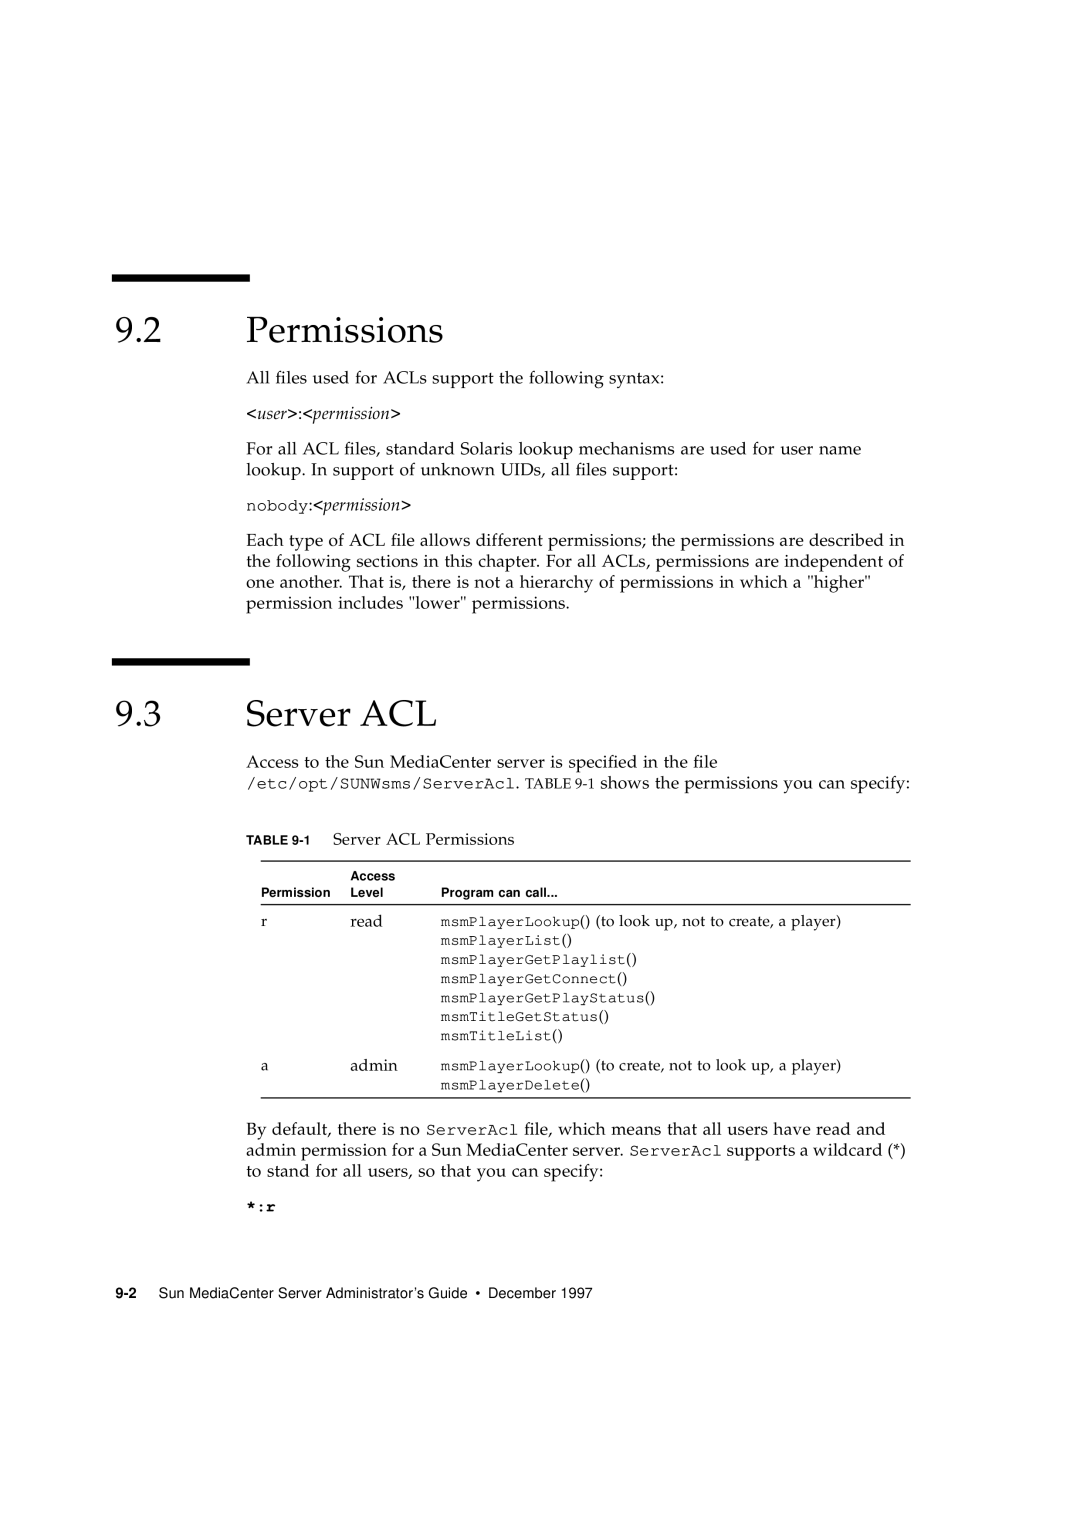 Sun Microsystems 2.1 manual Permissions, Server ACL, userpermission, nobodypermission 